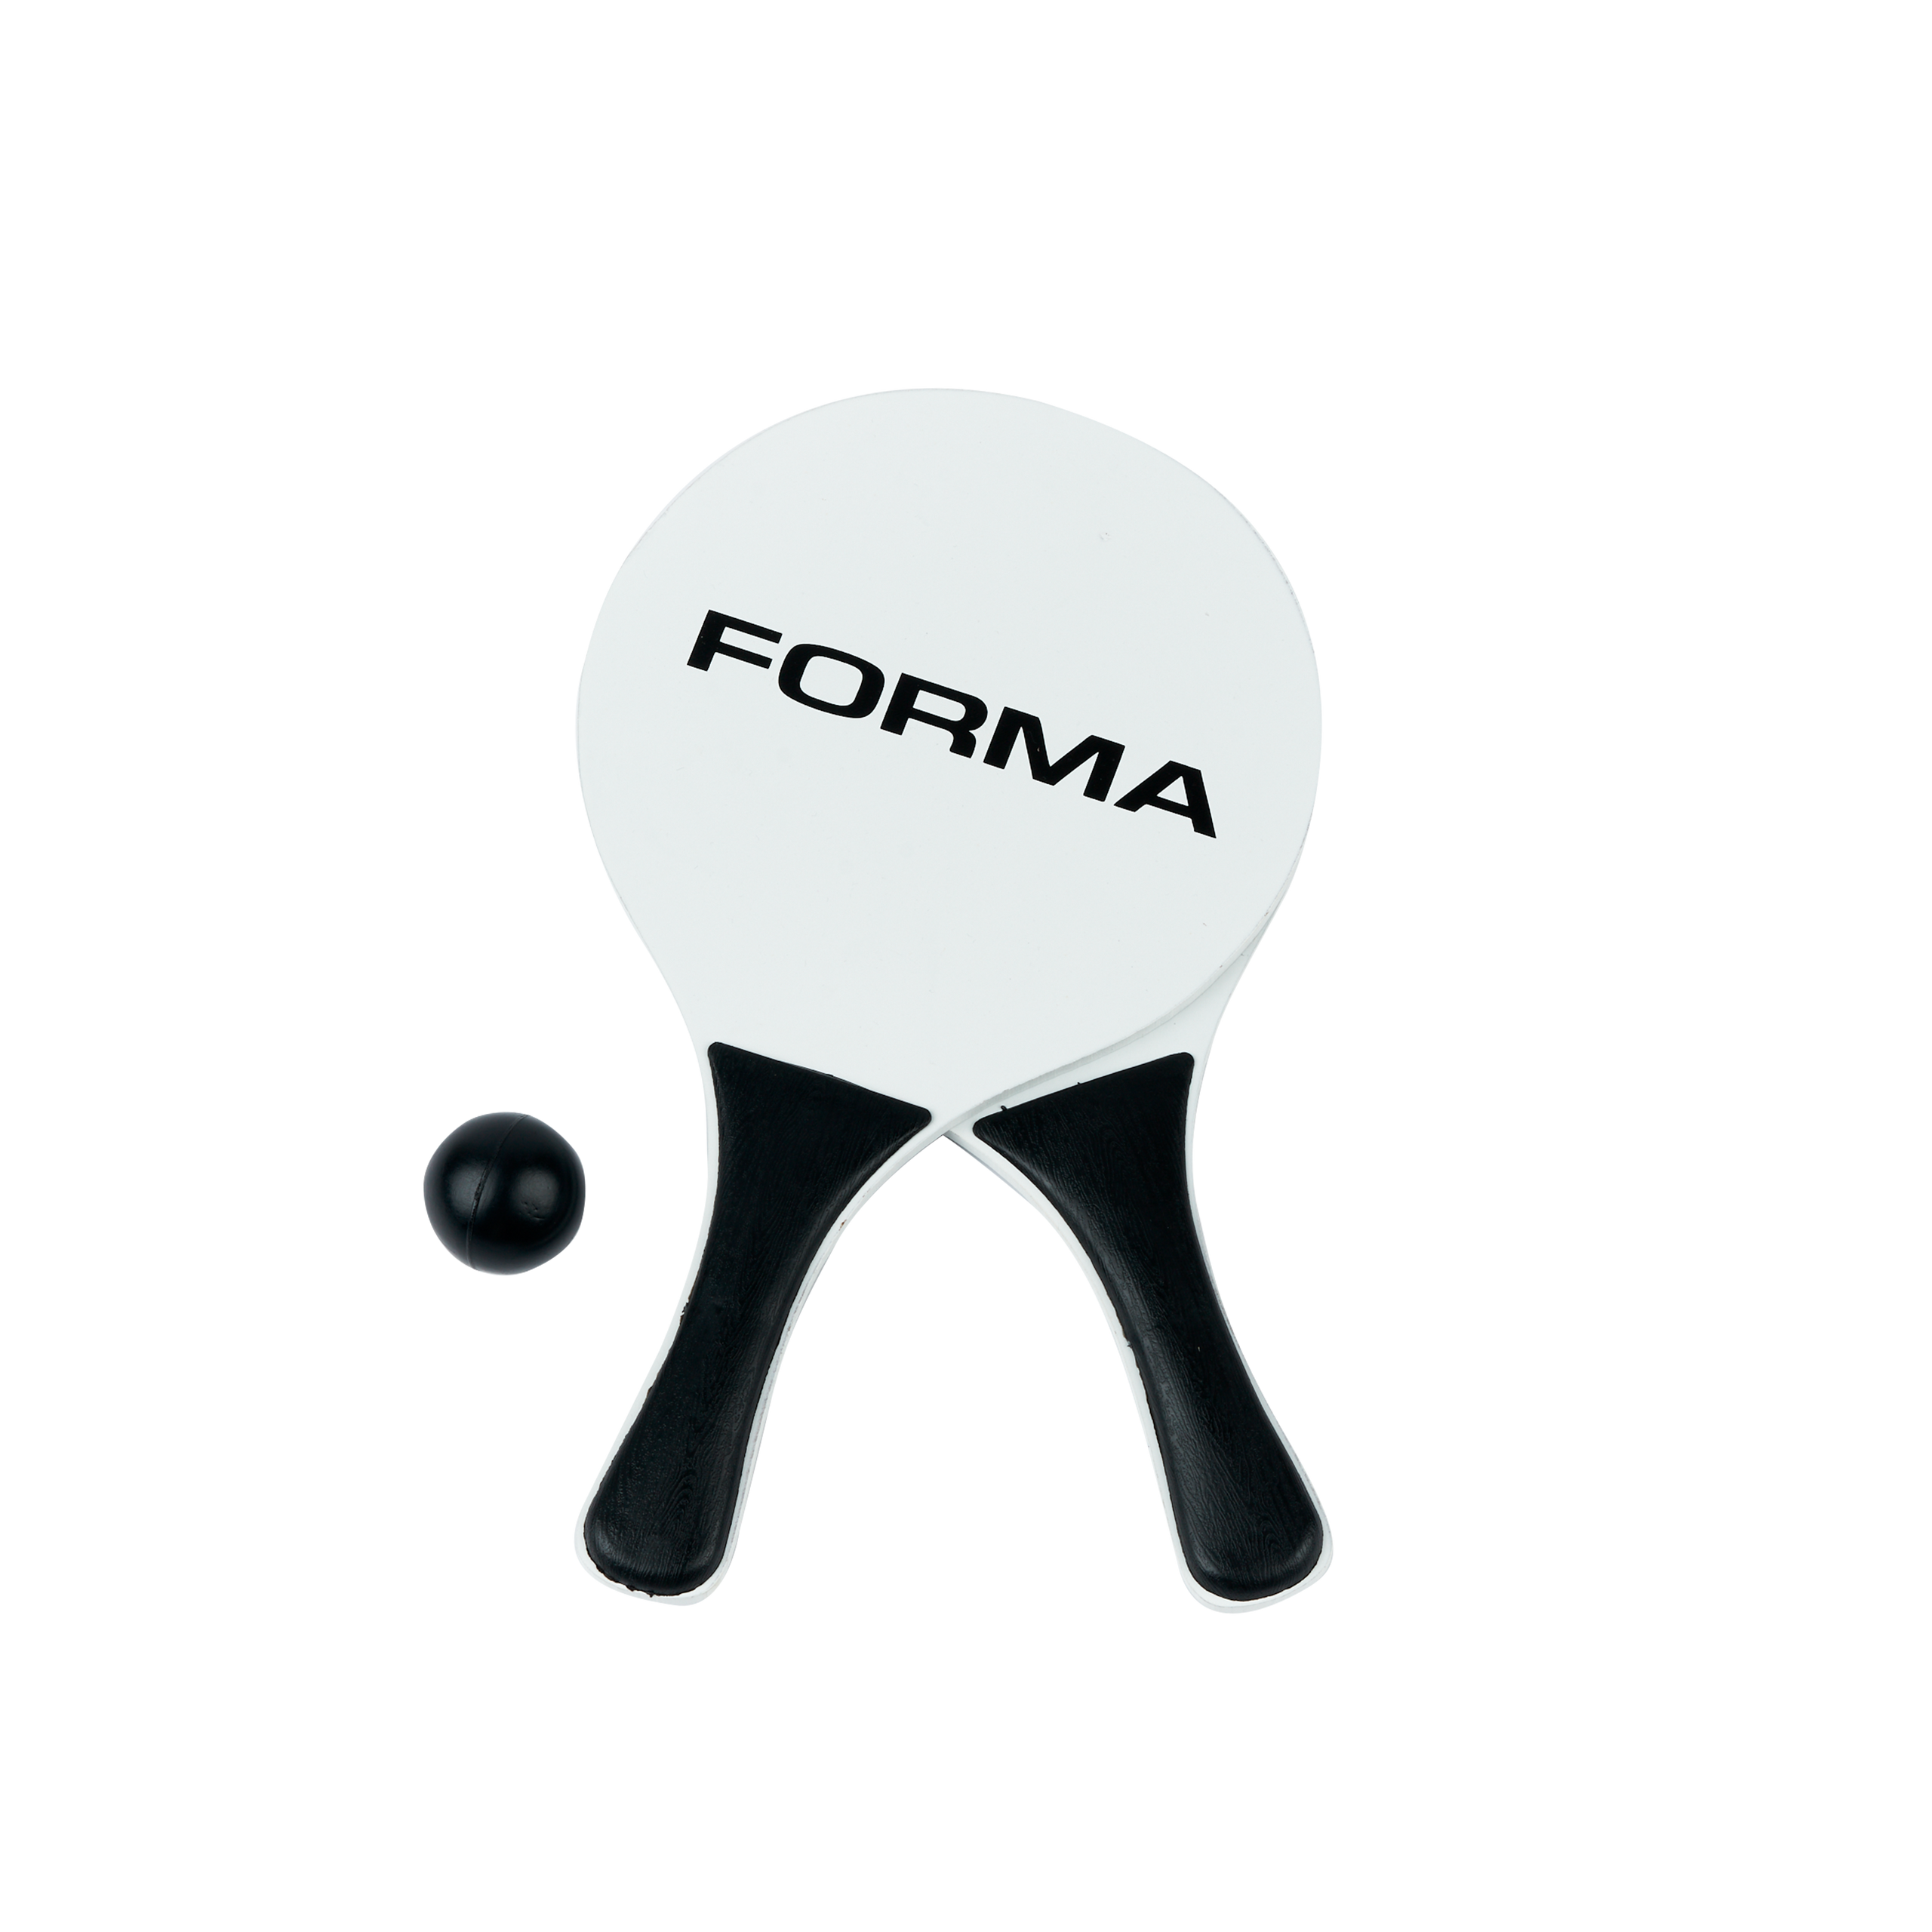 Forma beach paddleball set